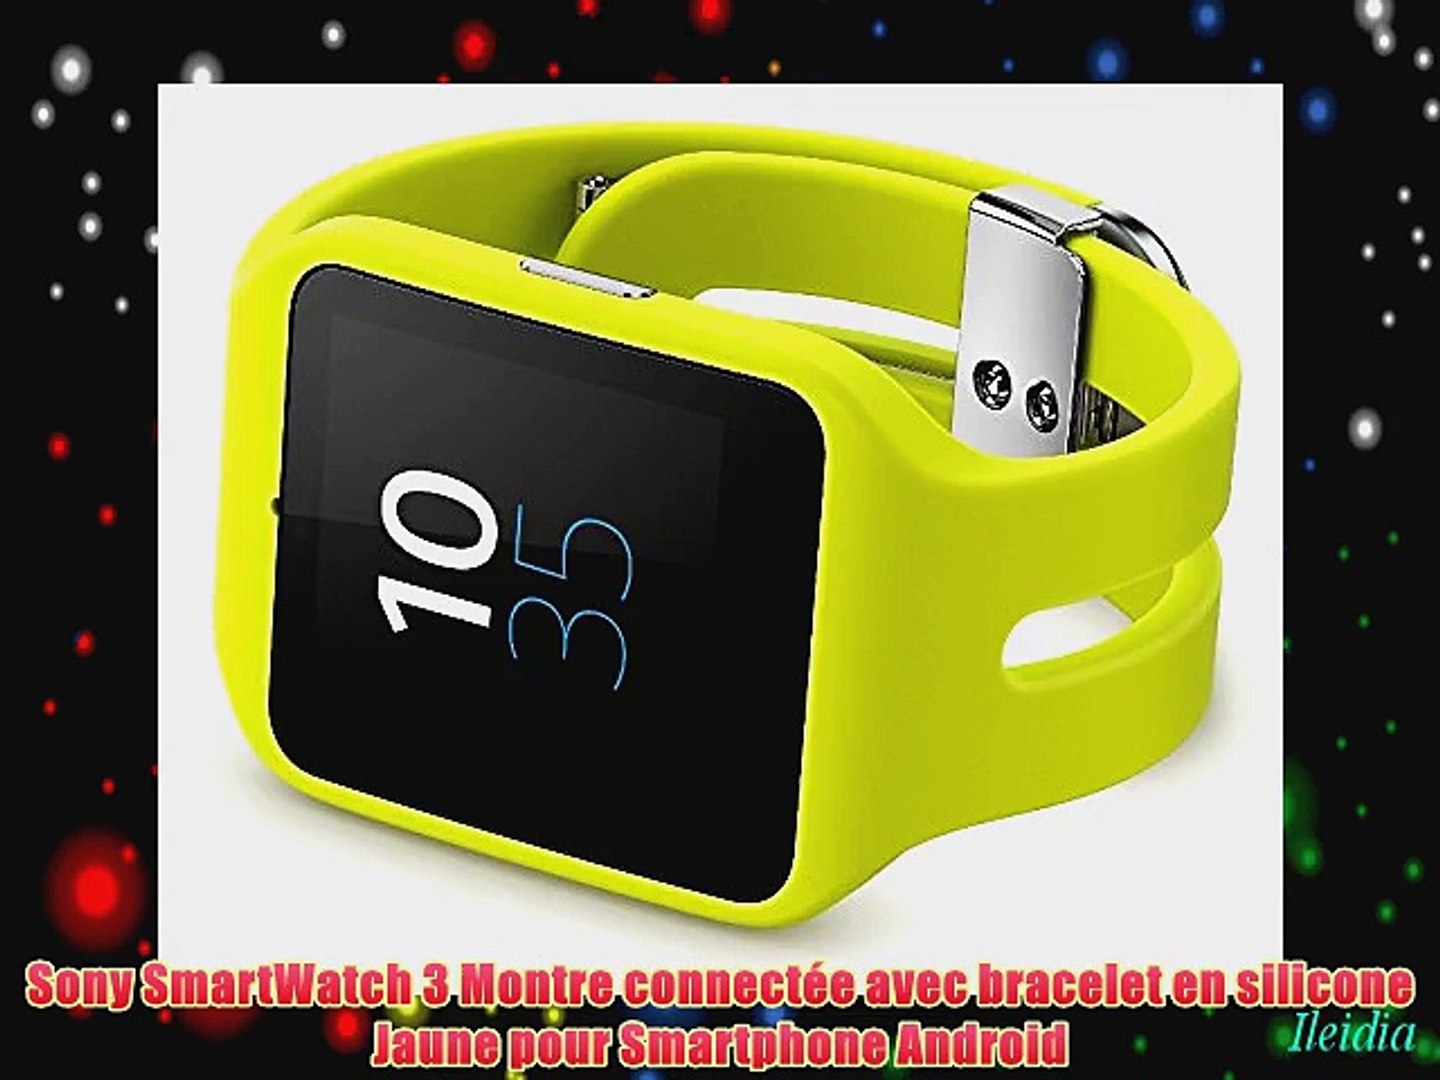 Sony SmartWatch 3 Montre connect?e avec bracelet en silicone Jaune pour  Smartphone Android - Video Dailymotion